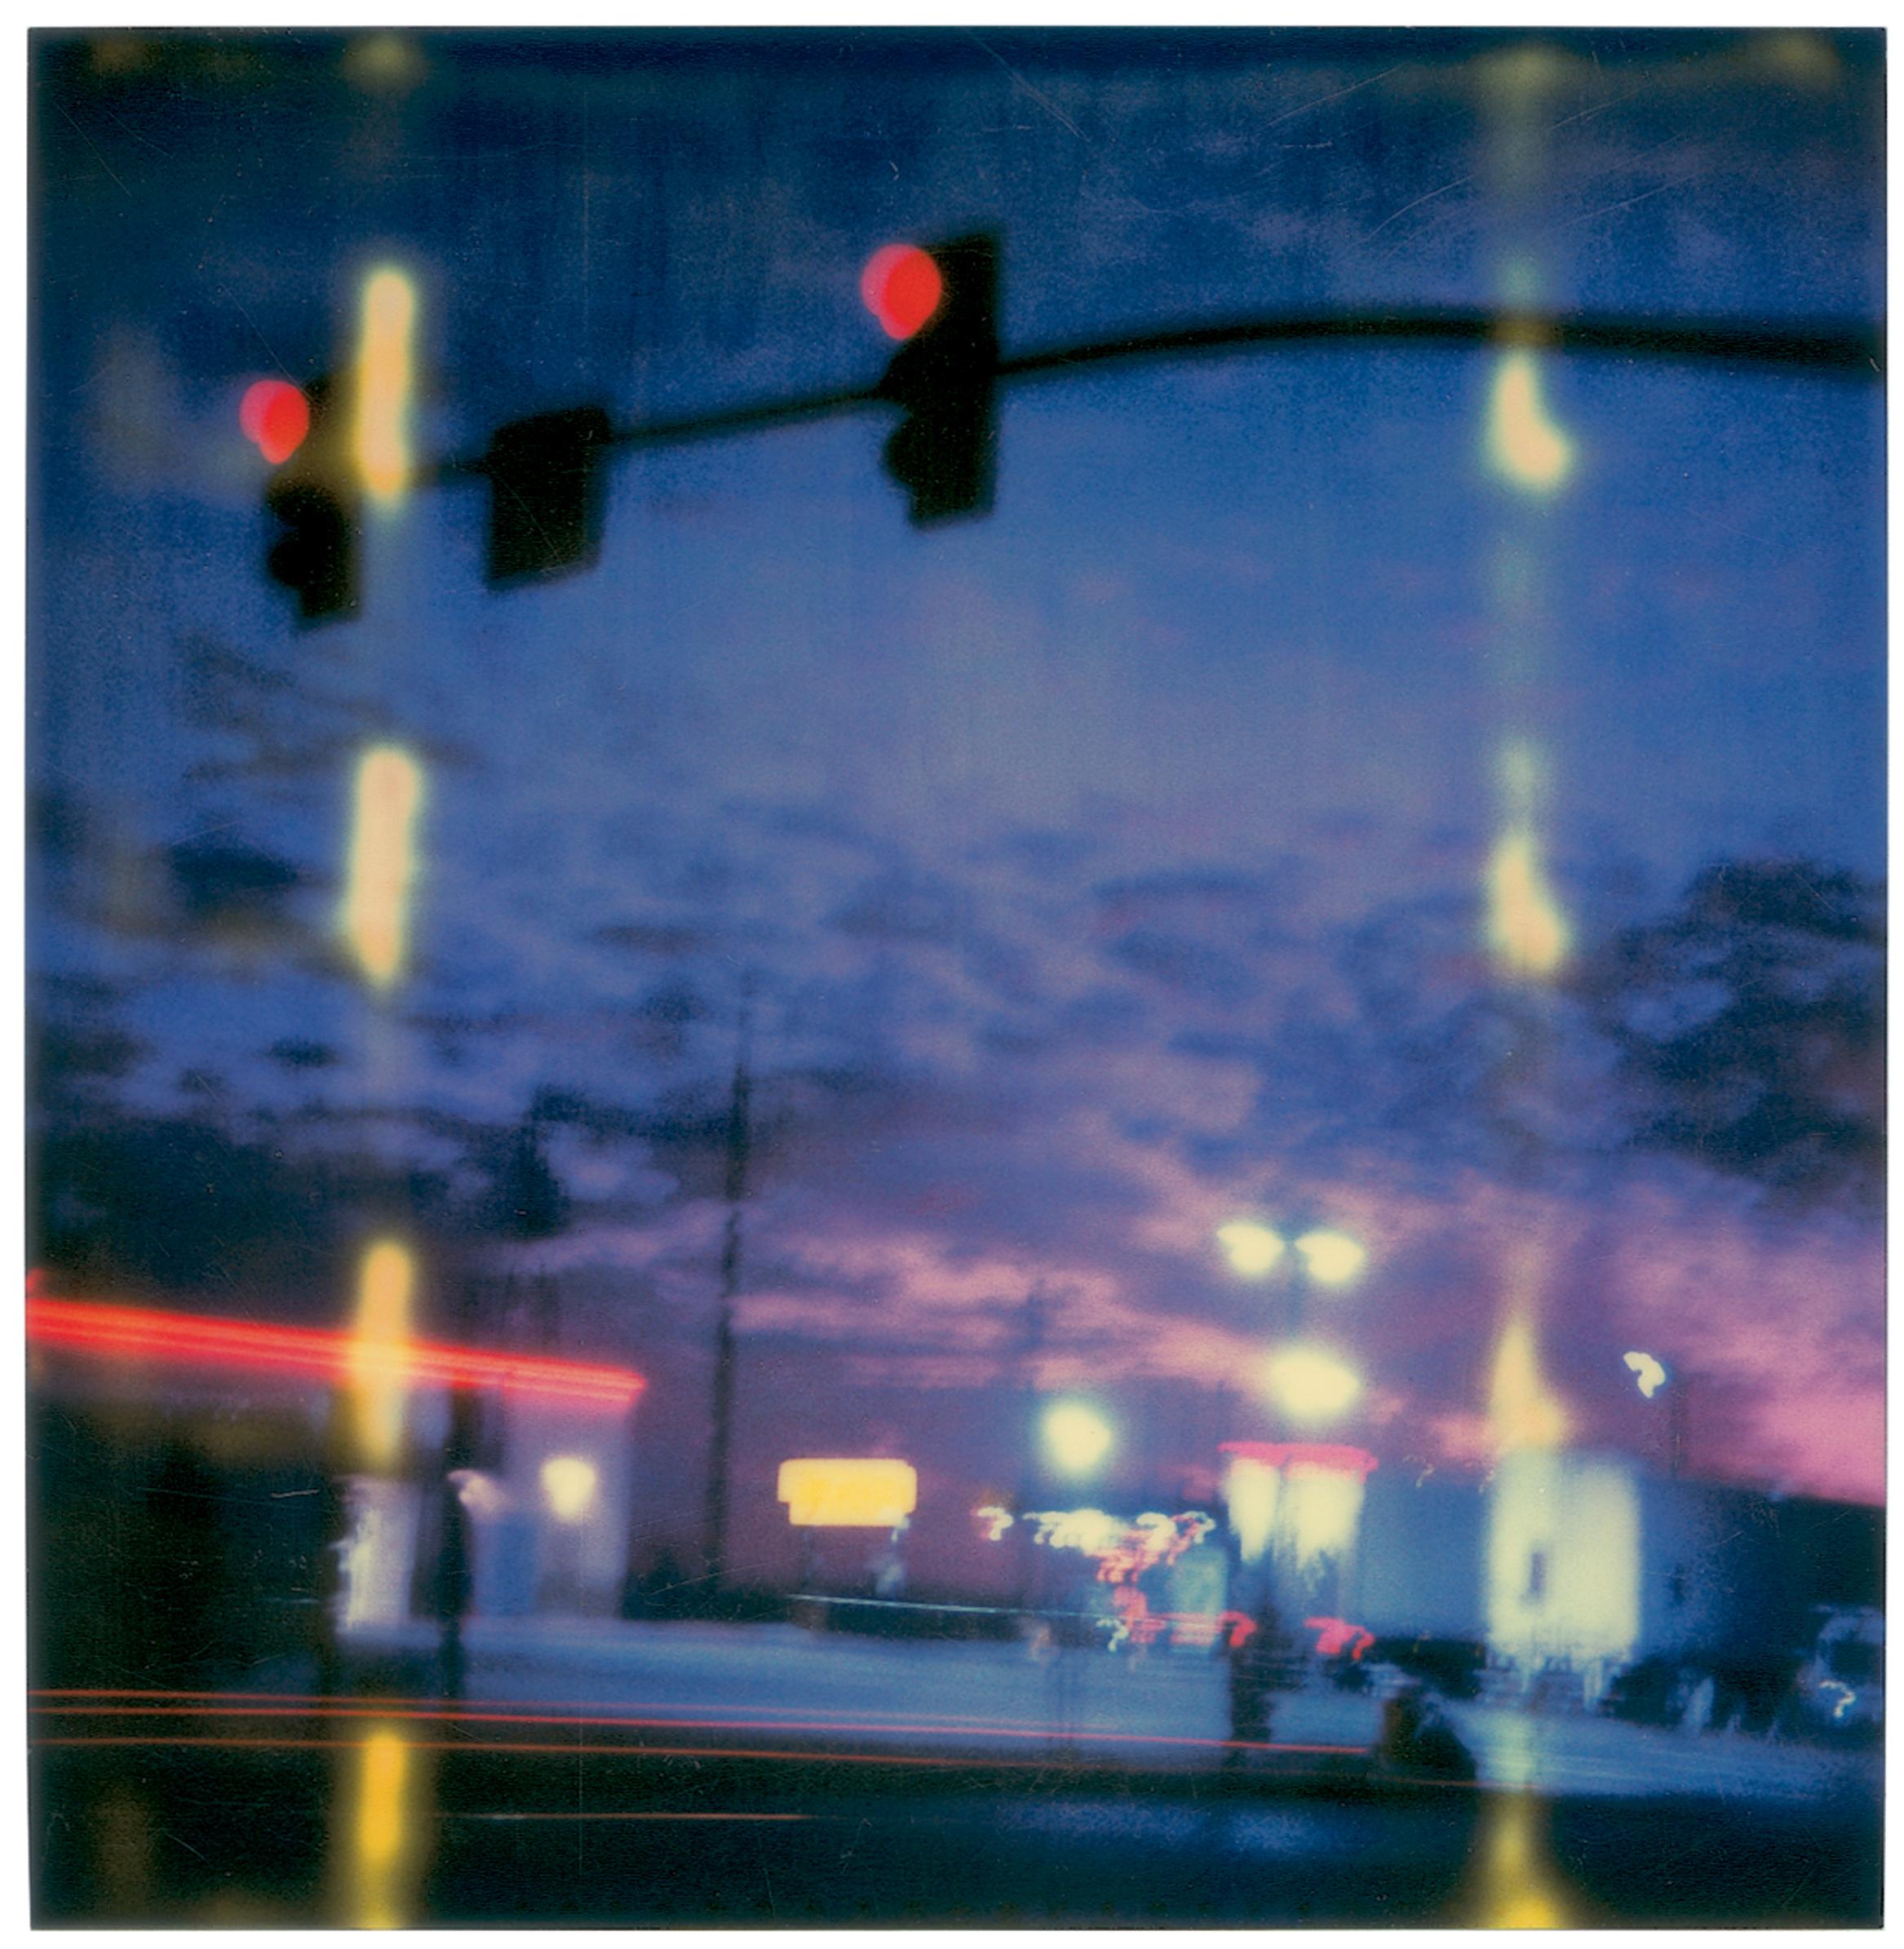 Four Corners Junction (Last Picture Show) - 5 pieces, analog, Polaroid - Photograph by Stefanie Schneider